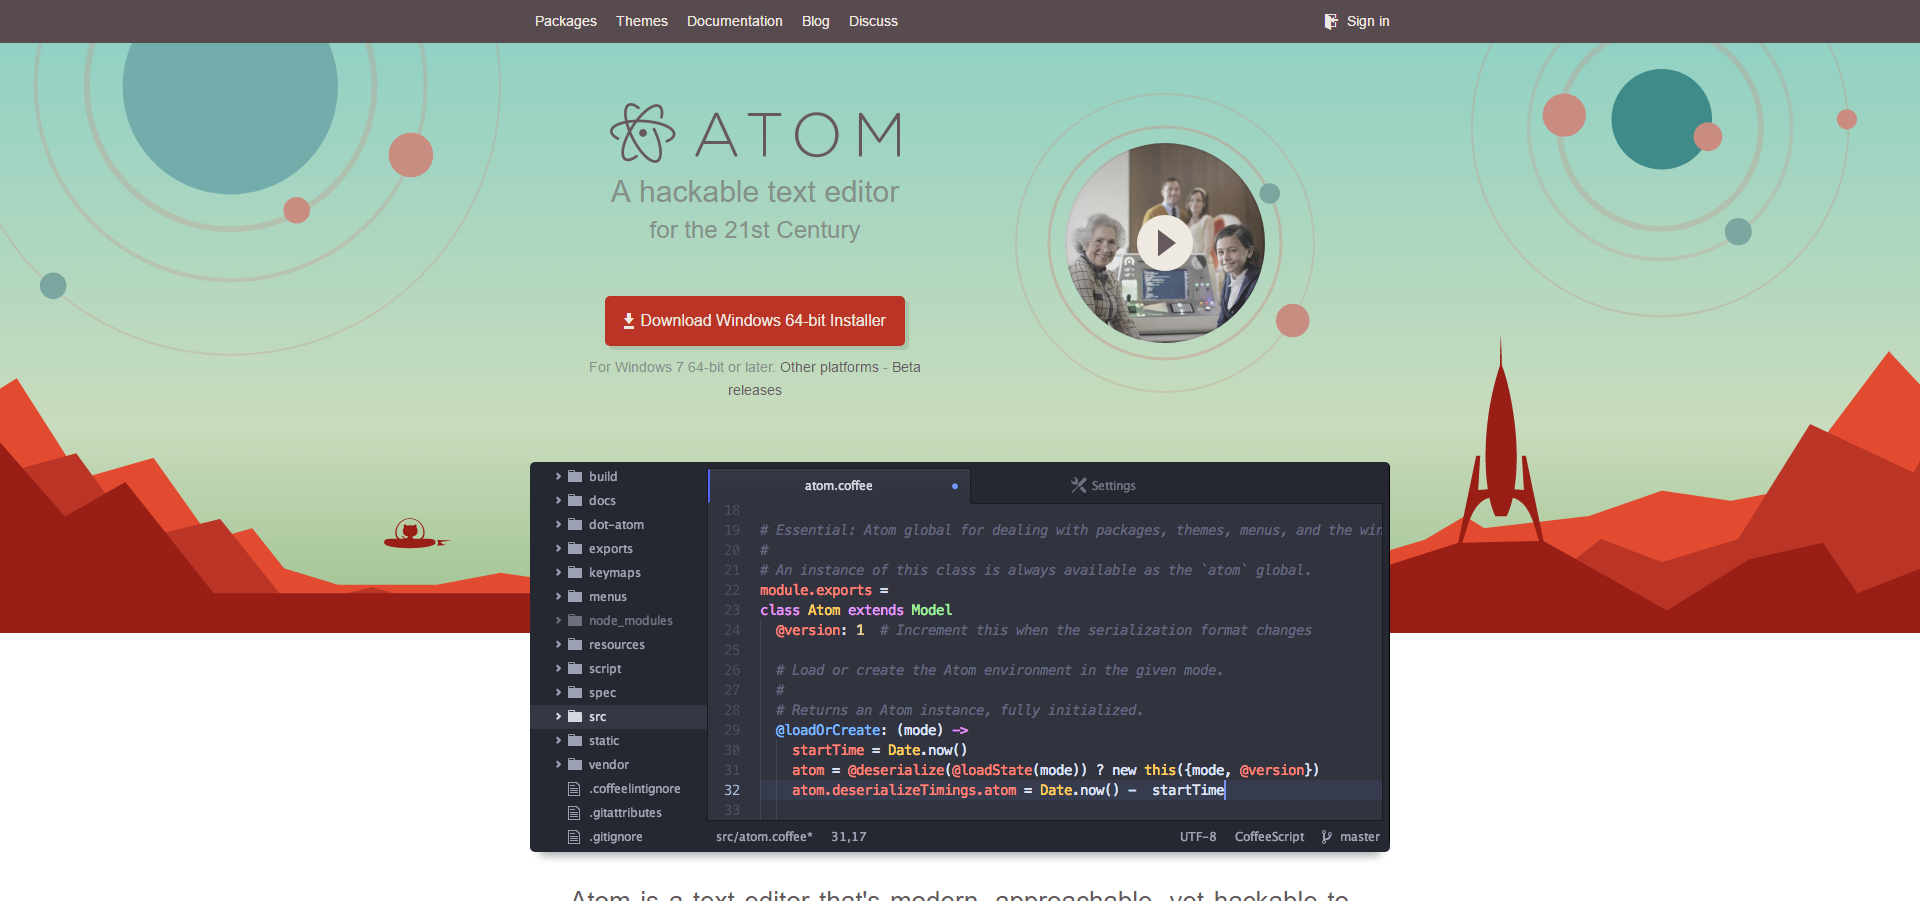 「Atom」のサイト